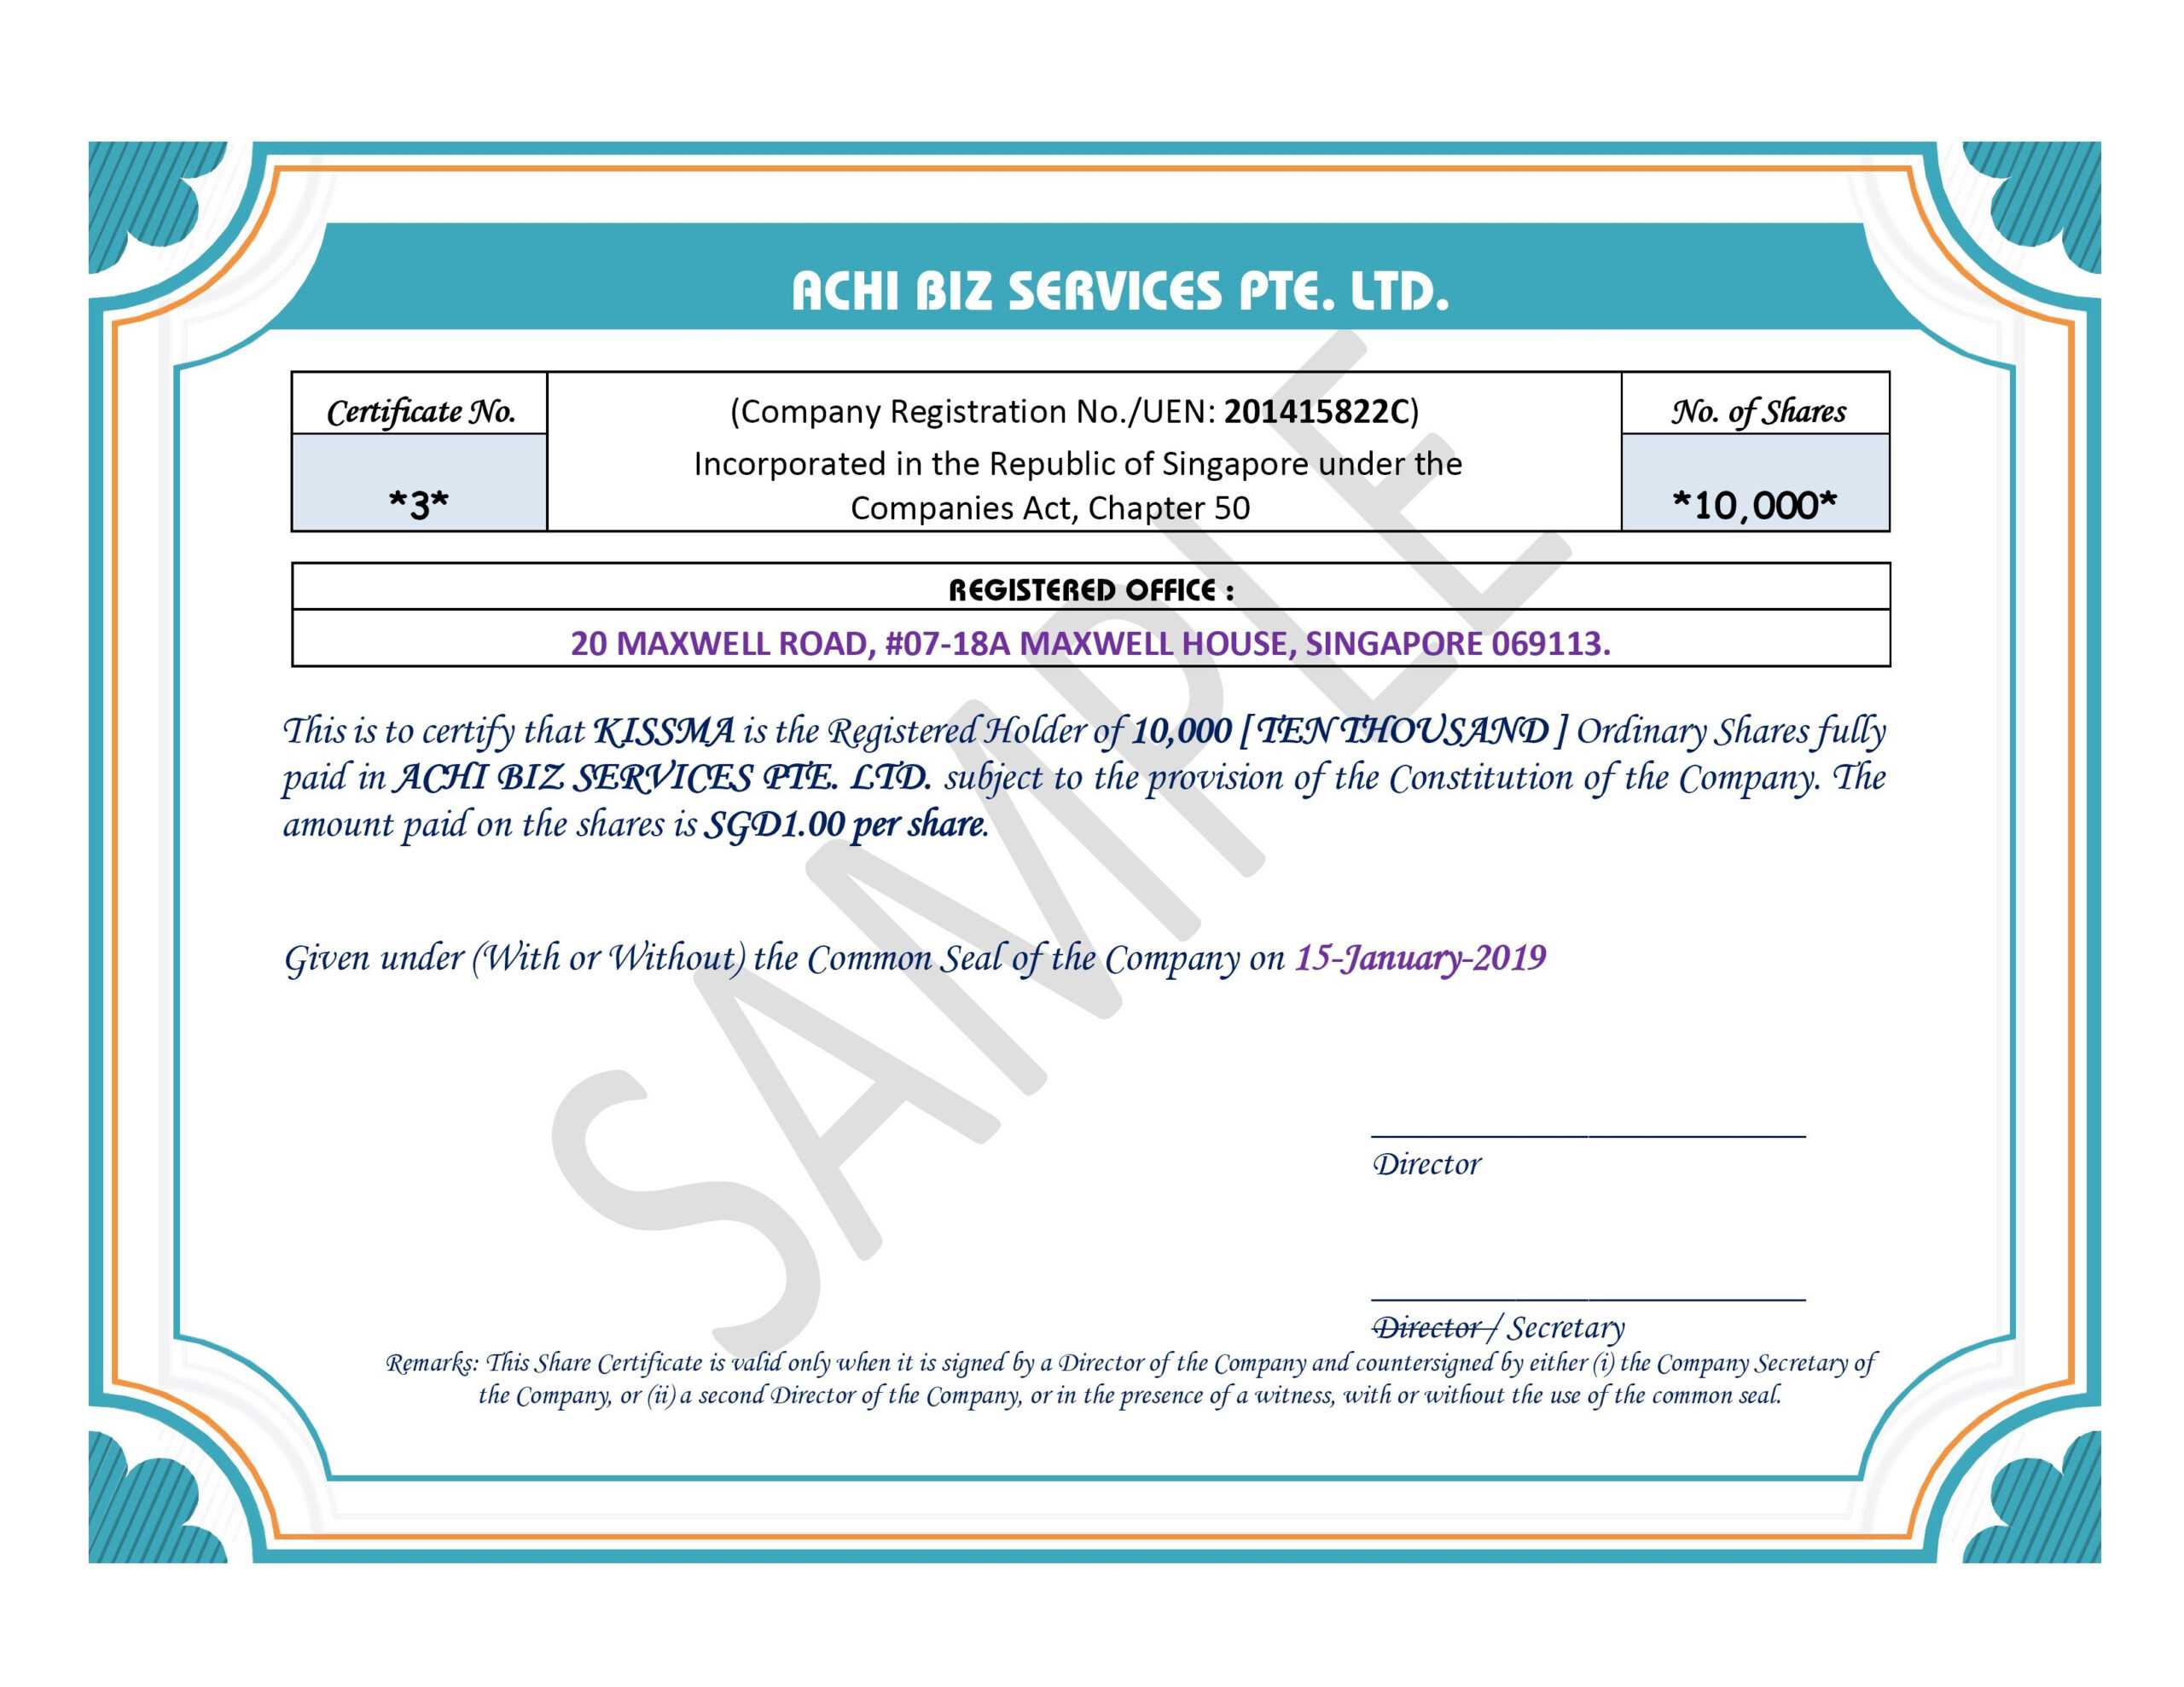 Share Certificate In Singapore ~ Achibiz Regarding Template For Share Certificate